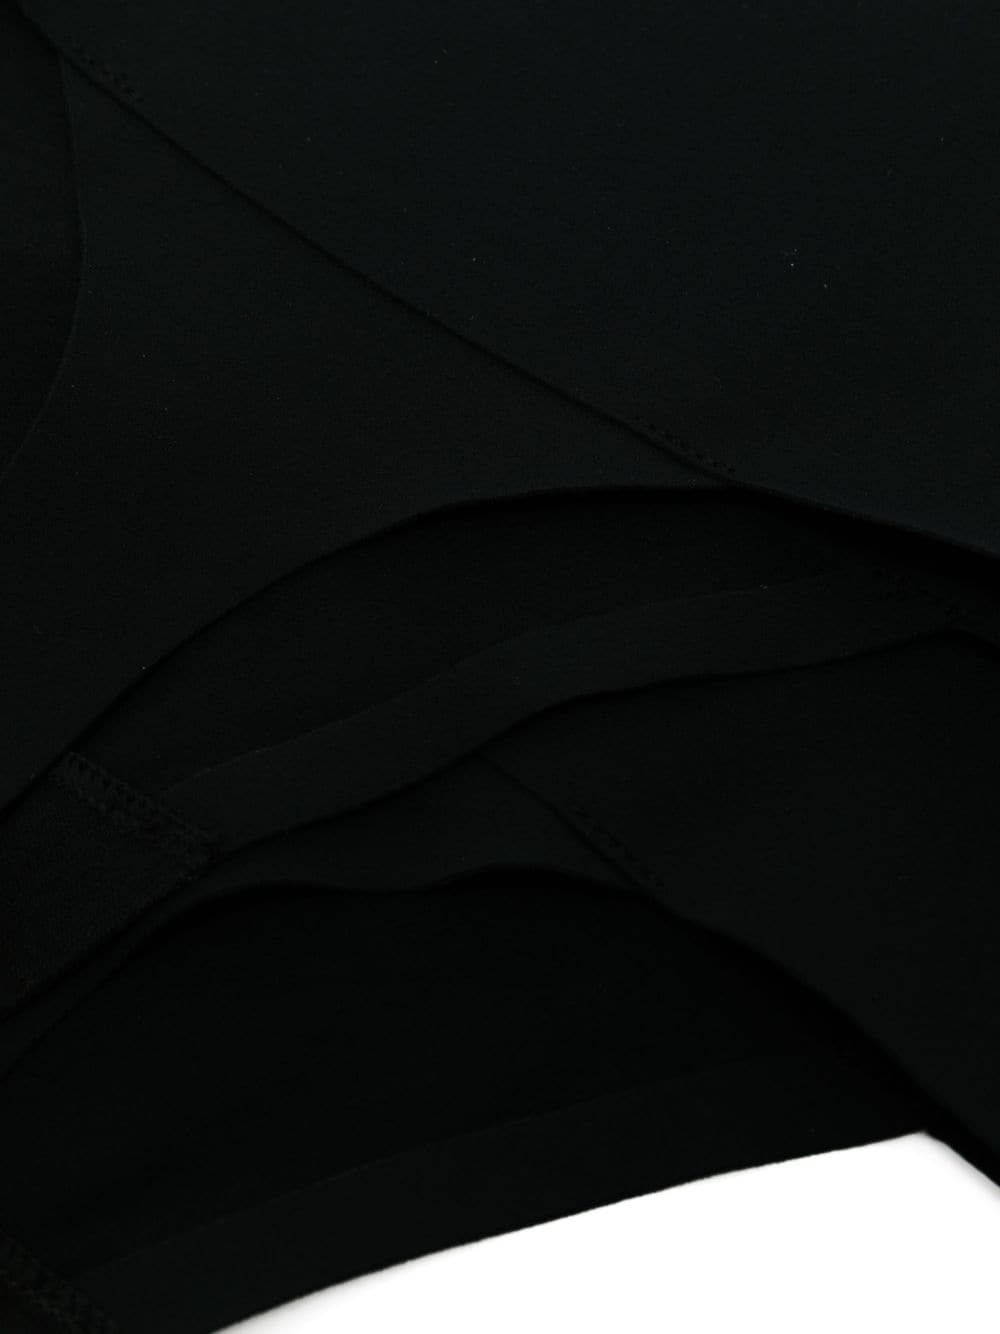 Spanx Two-pack Undie-tectable Thong In Black